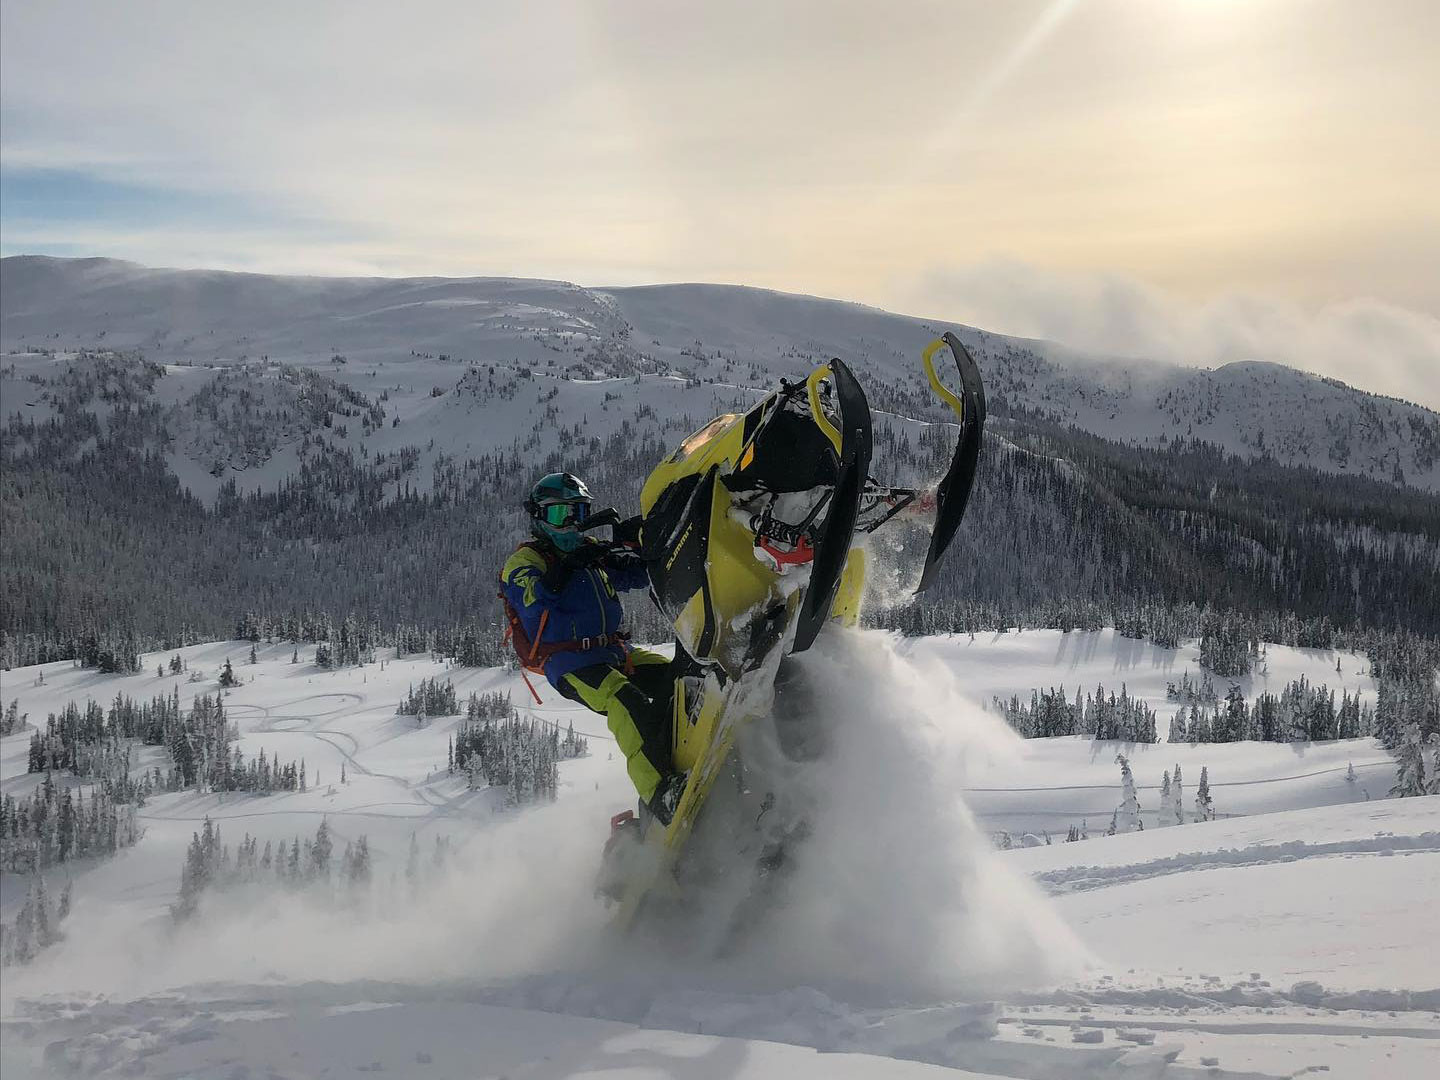 Dave Norona, proud Ski-Doo ambassador, performs a wheelie on this snowmobile